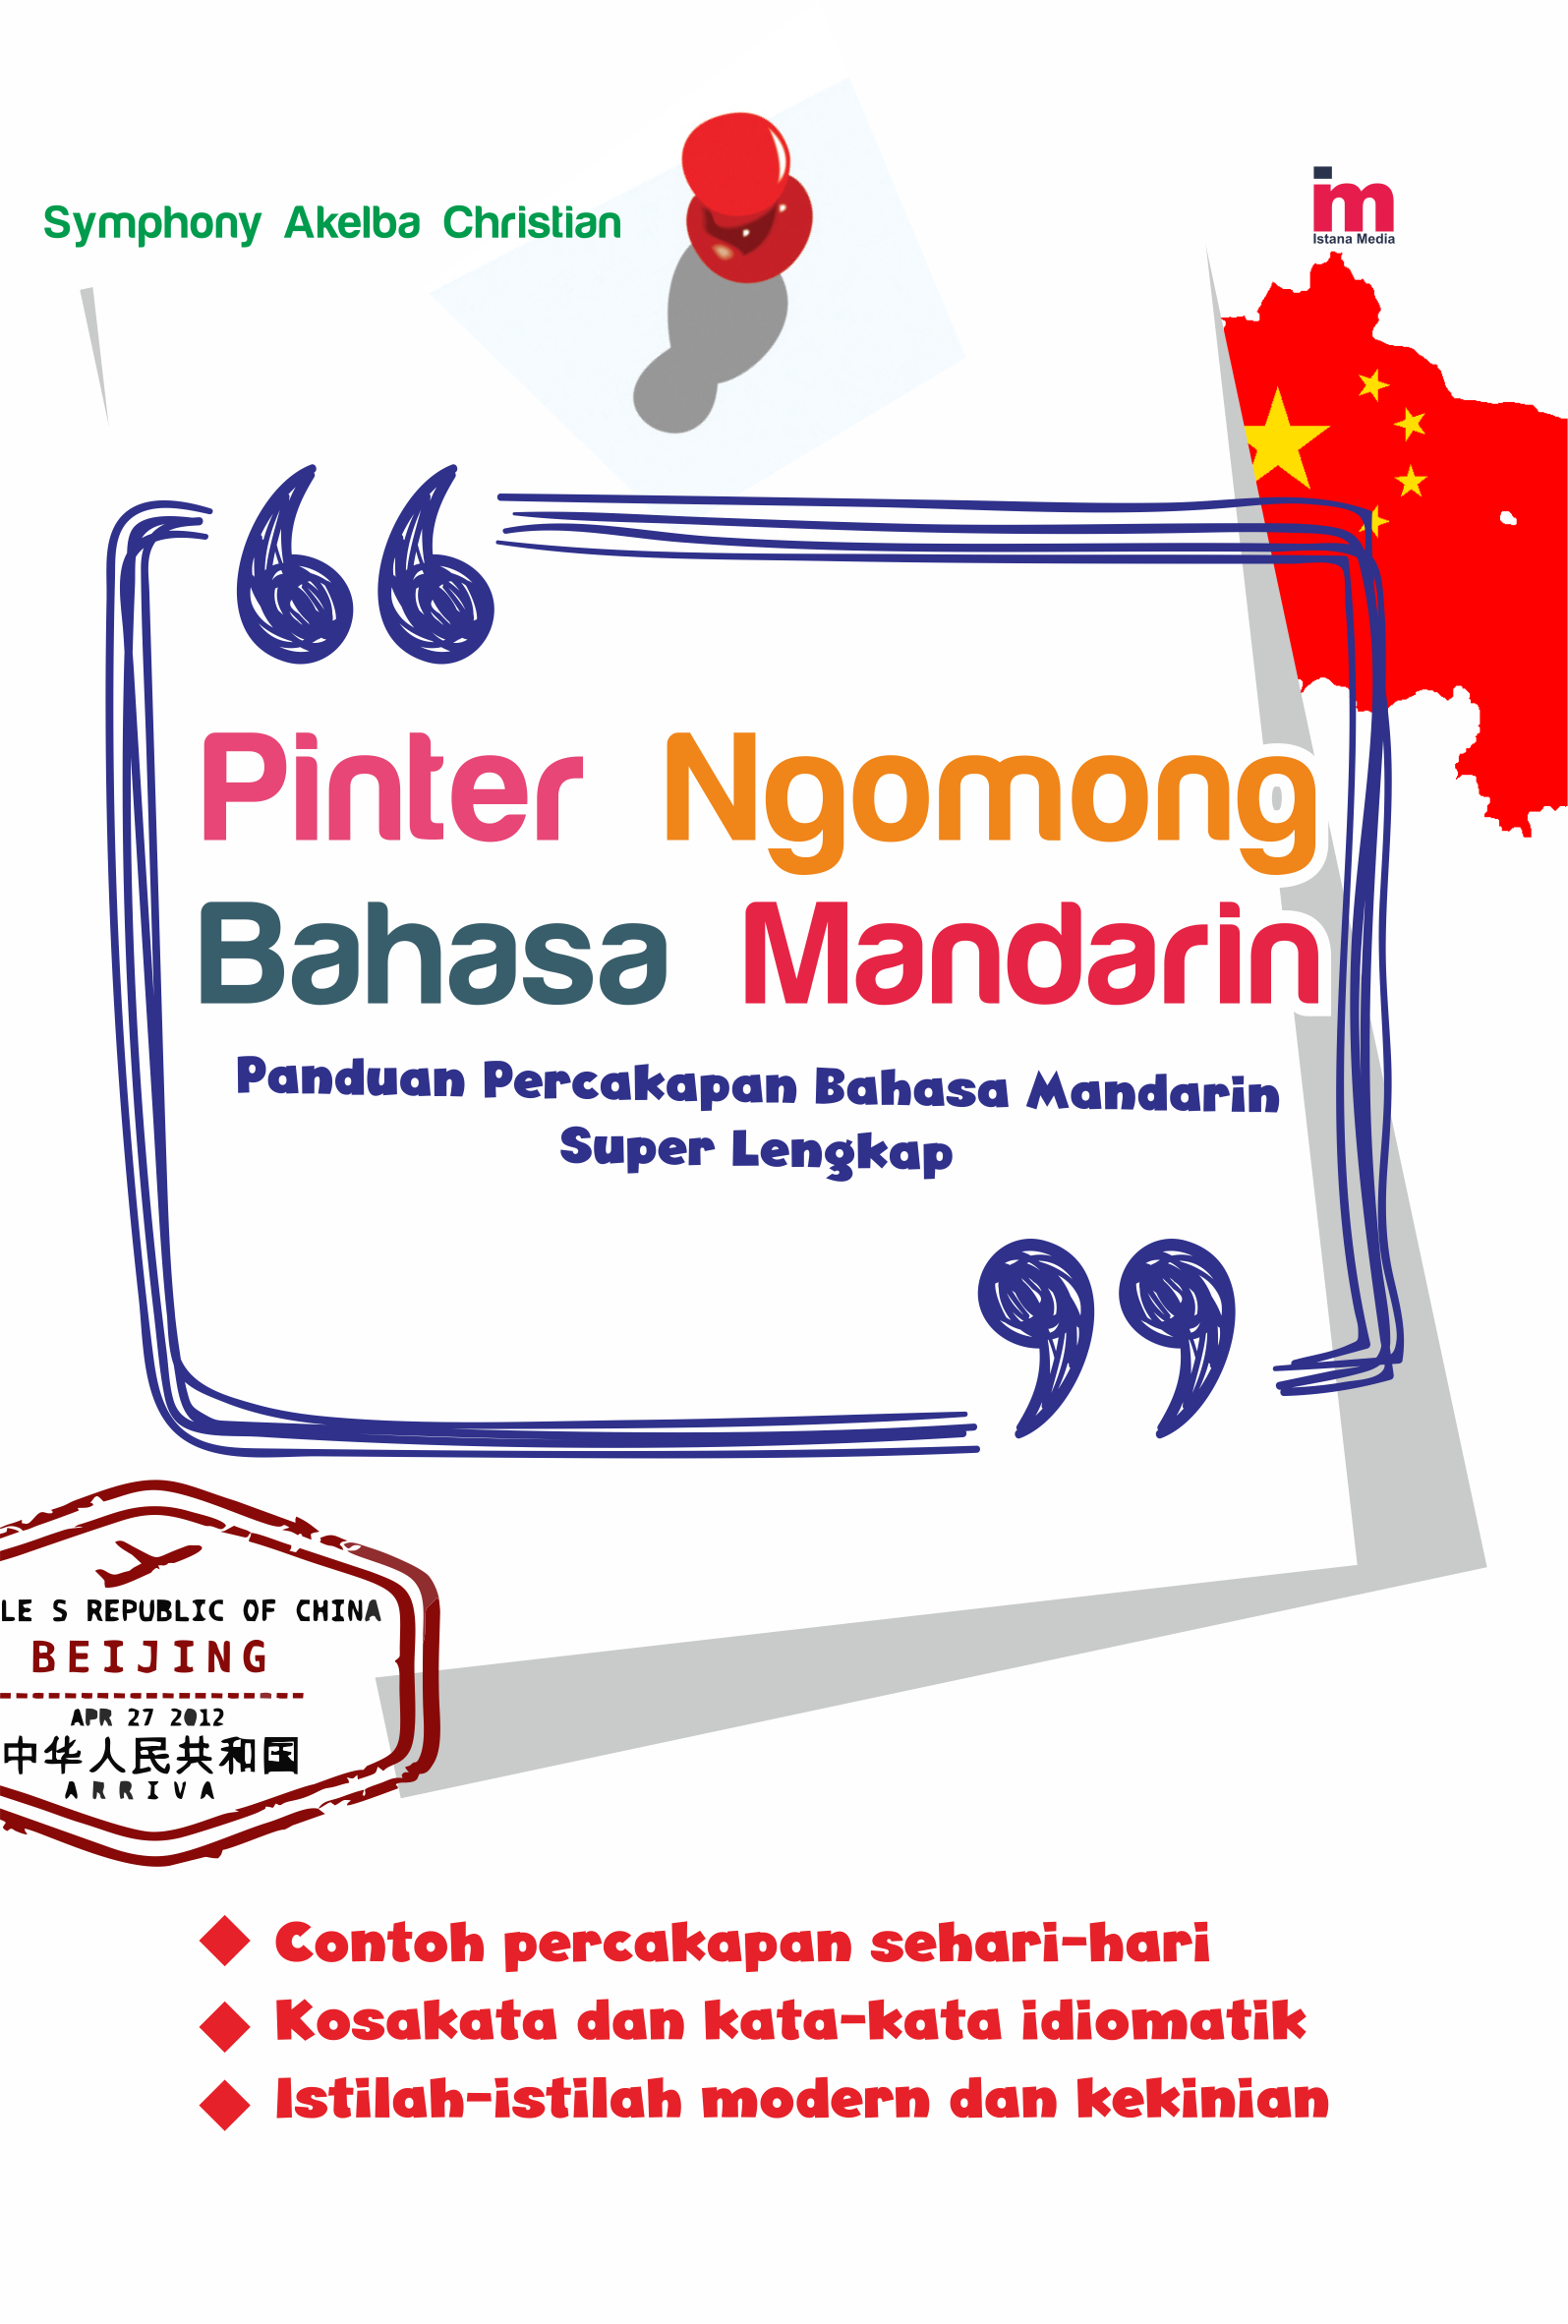 cover/(01-12-2019)pinter-ngomong-bahasa-mandarin.png